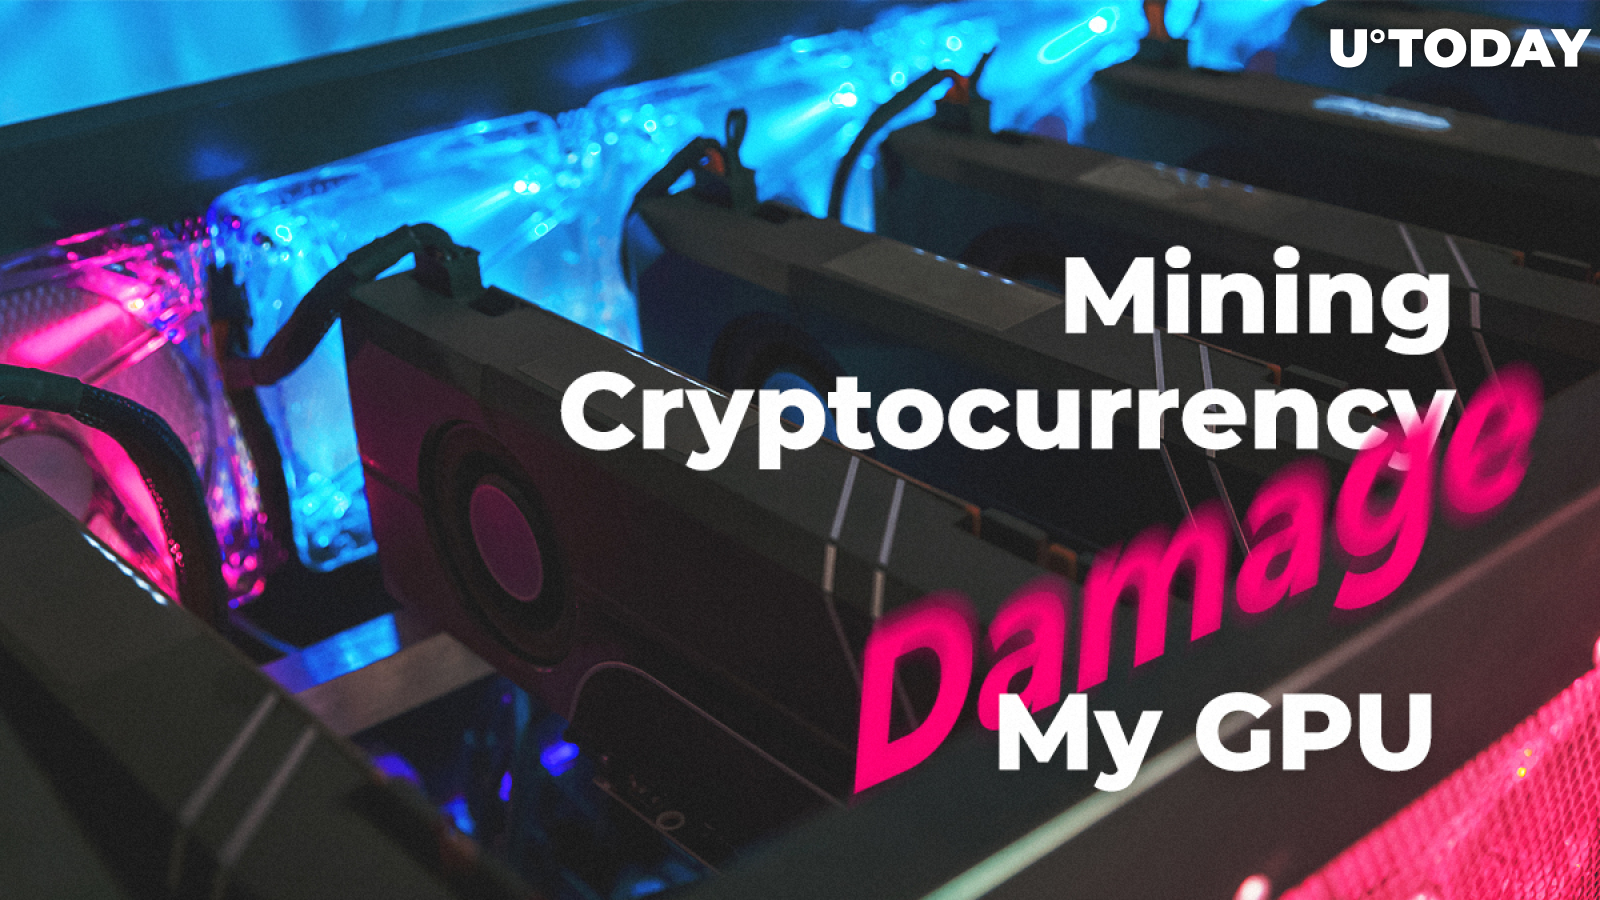 May Mining Cryptocurrency Damage My GPU?